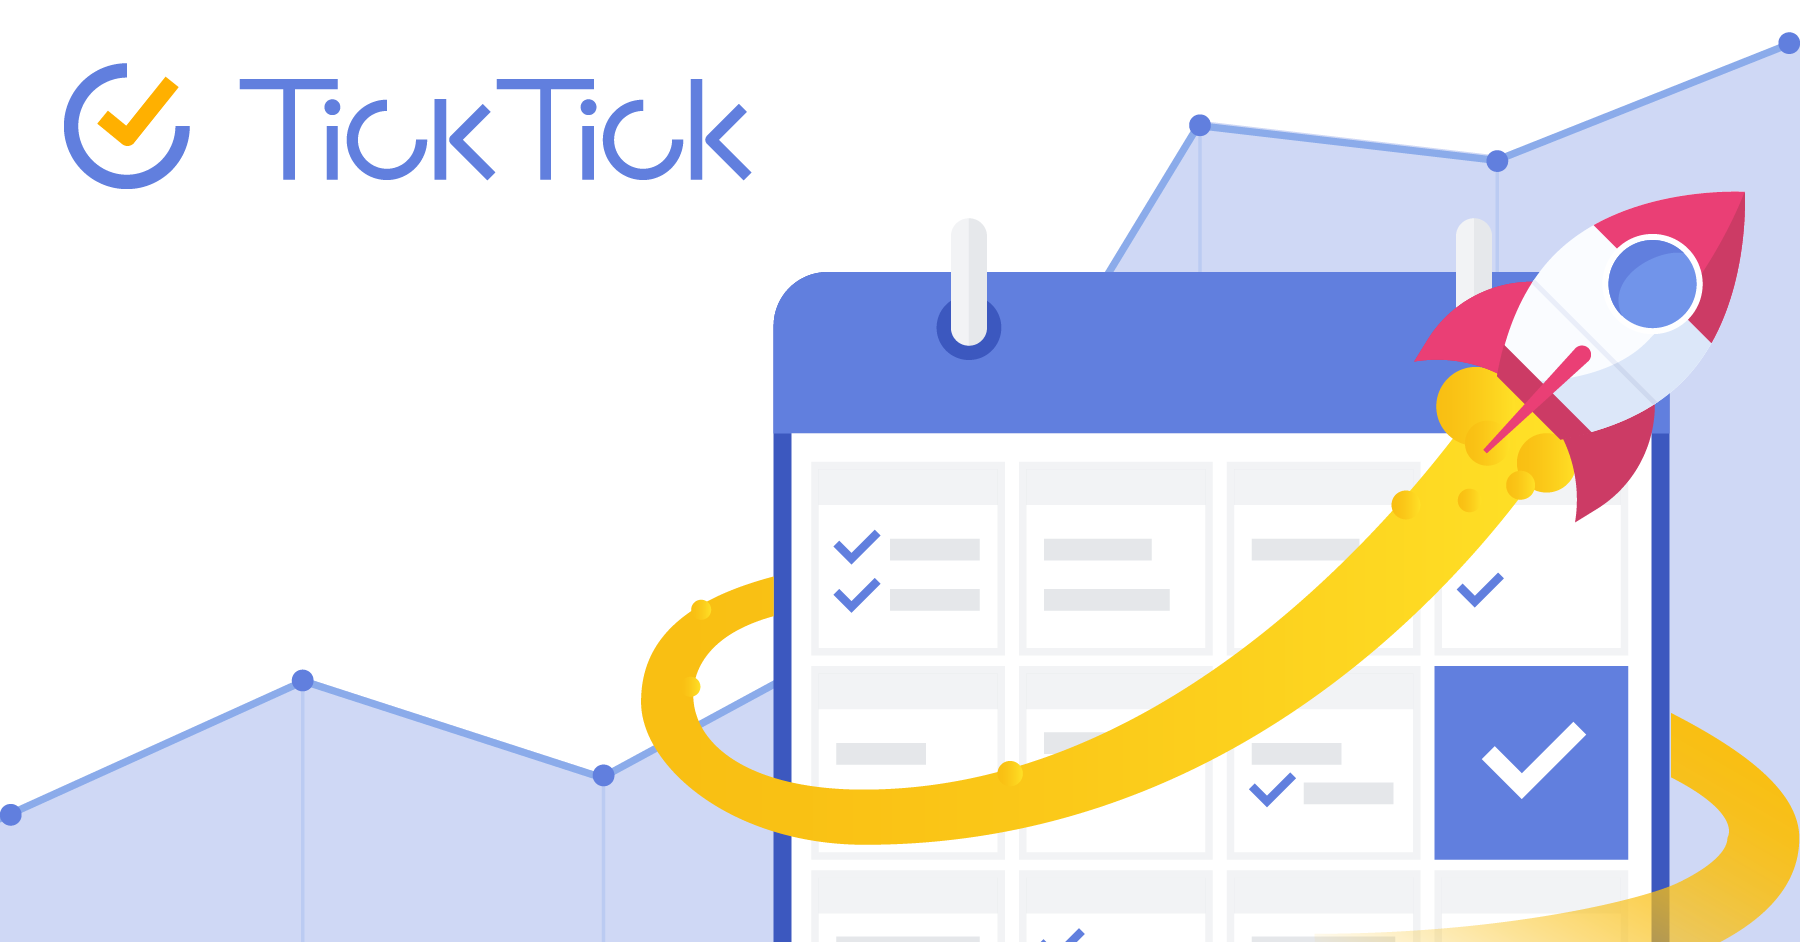 Graphic of the Tick Tick logo.